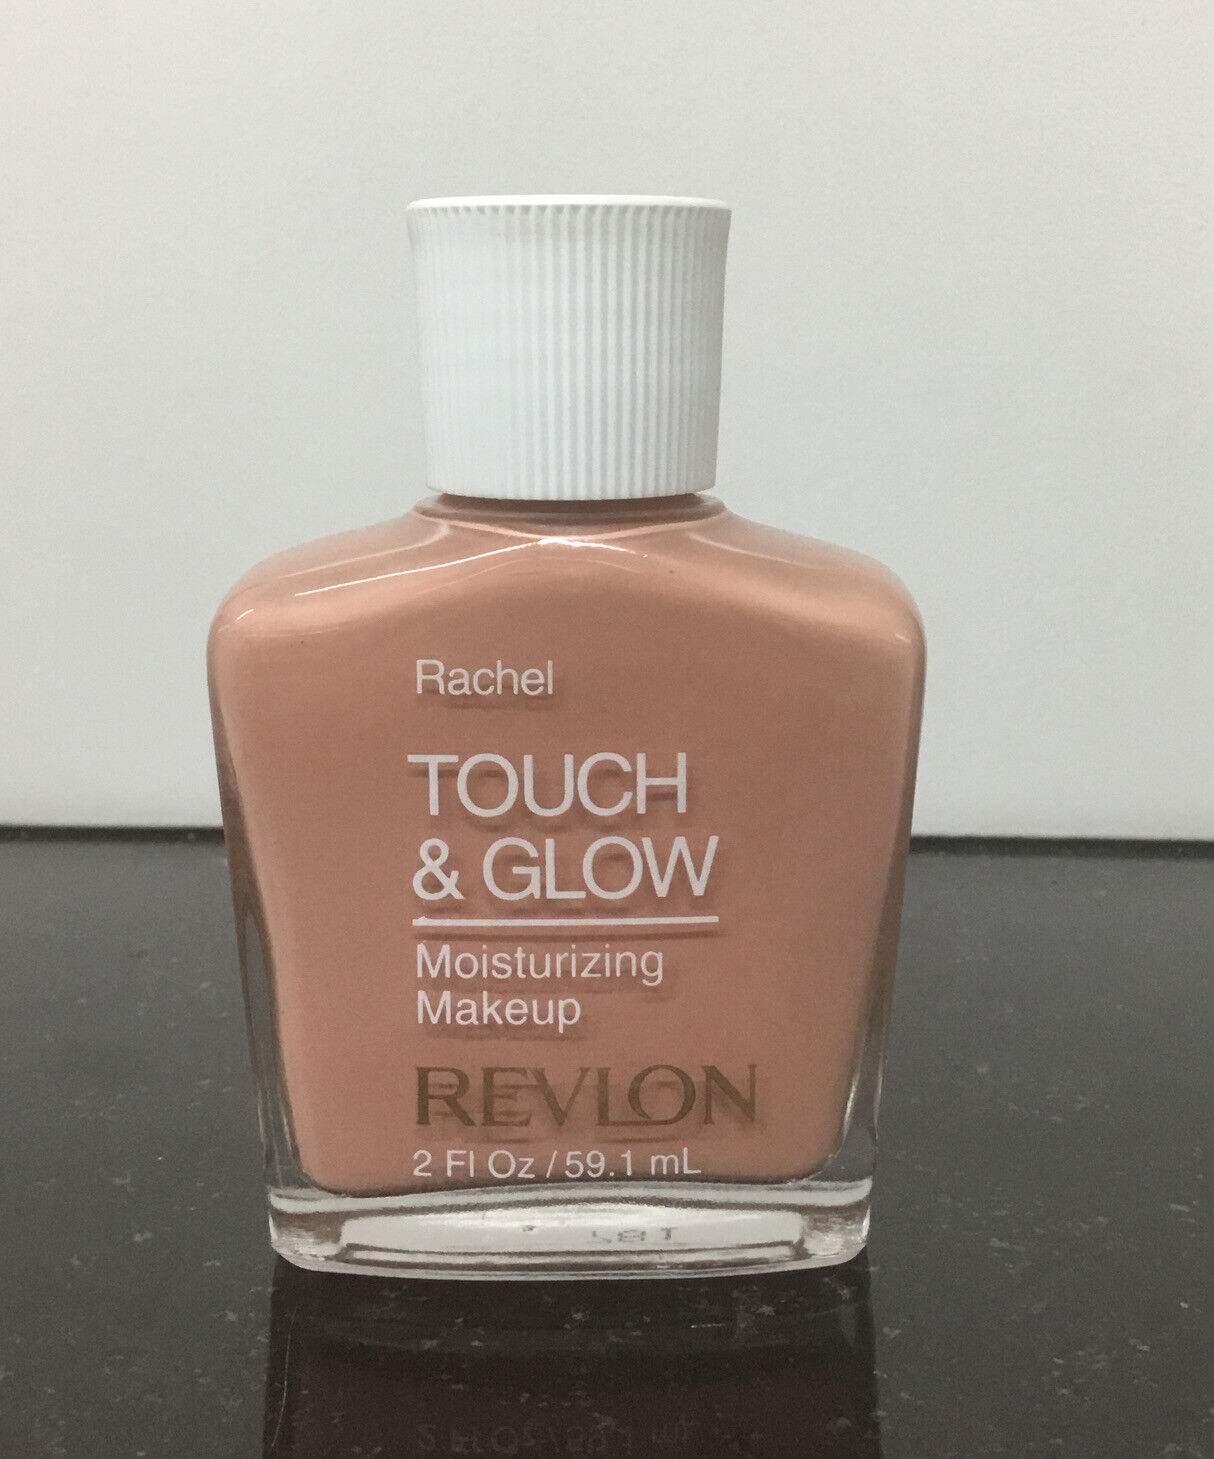 NEW Revlon Touch & Glow Moisturizing Makeup - Rachel 2 fl oz - RARE, VINTAGE